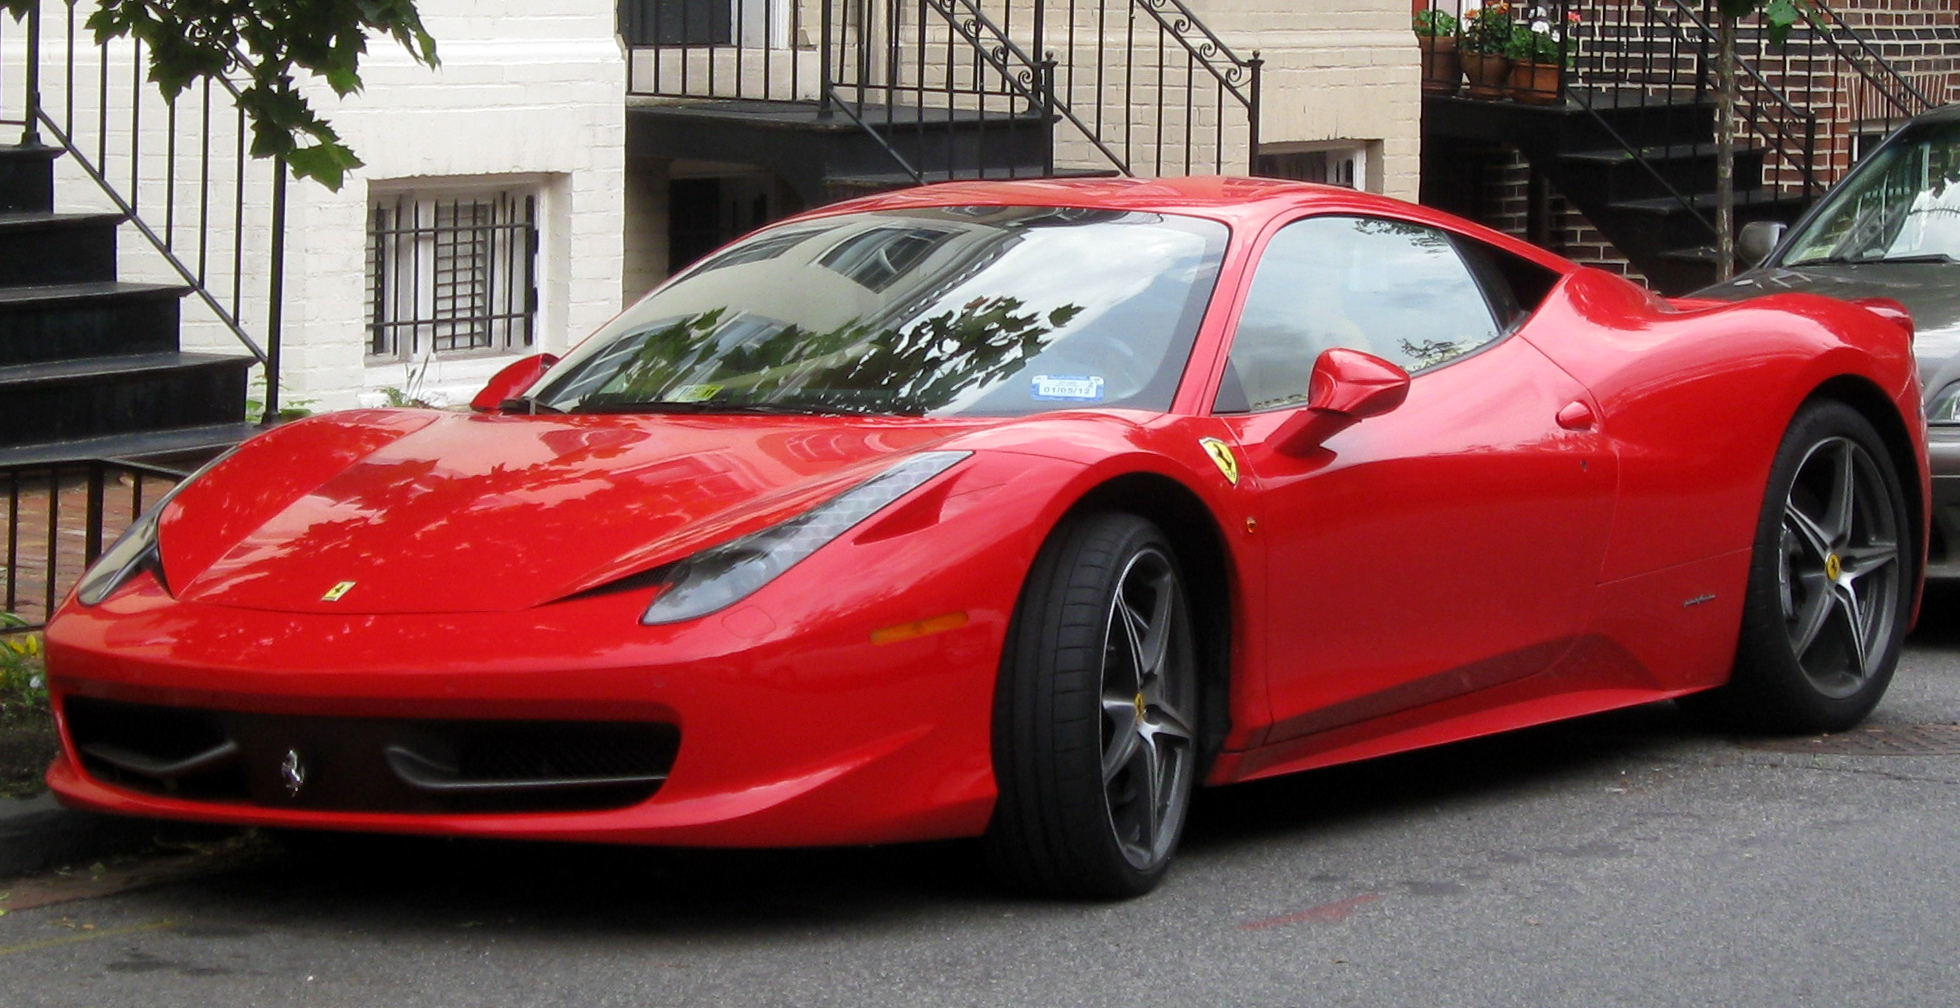 File:Ferrari 458 Italia -- 05-18-2011.jpg - Wikimedia Commons